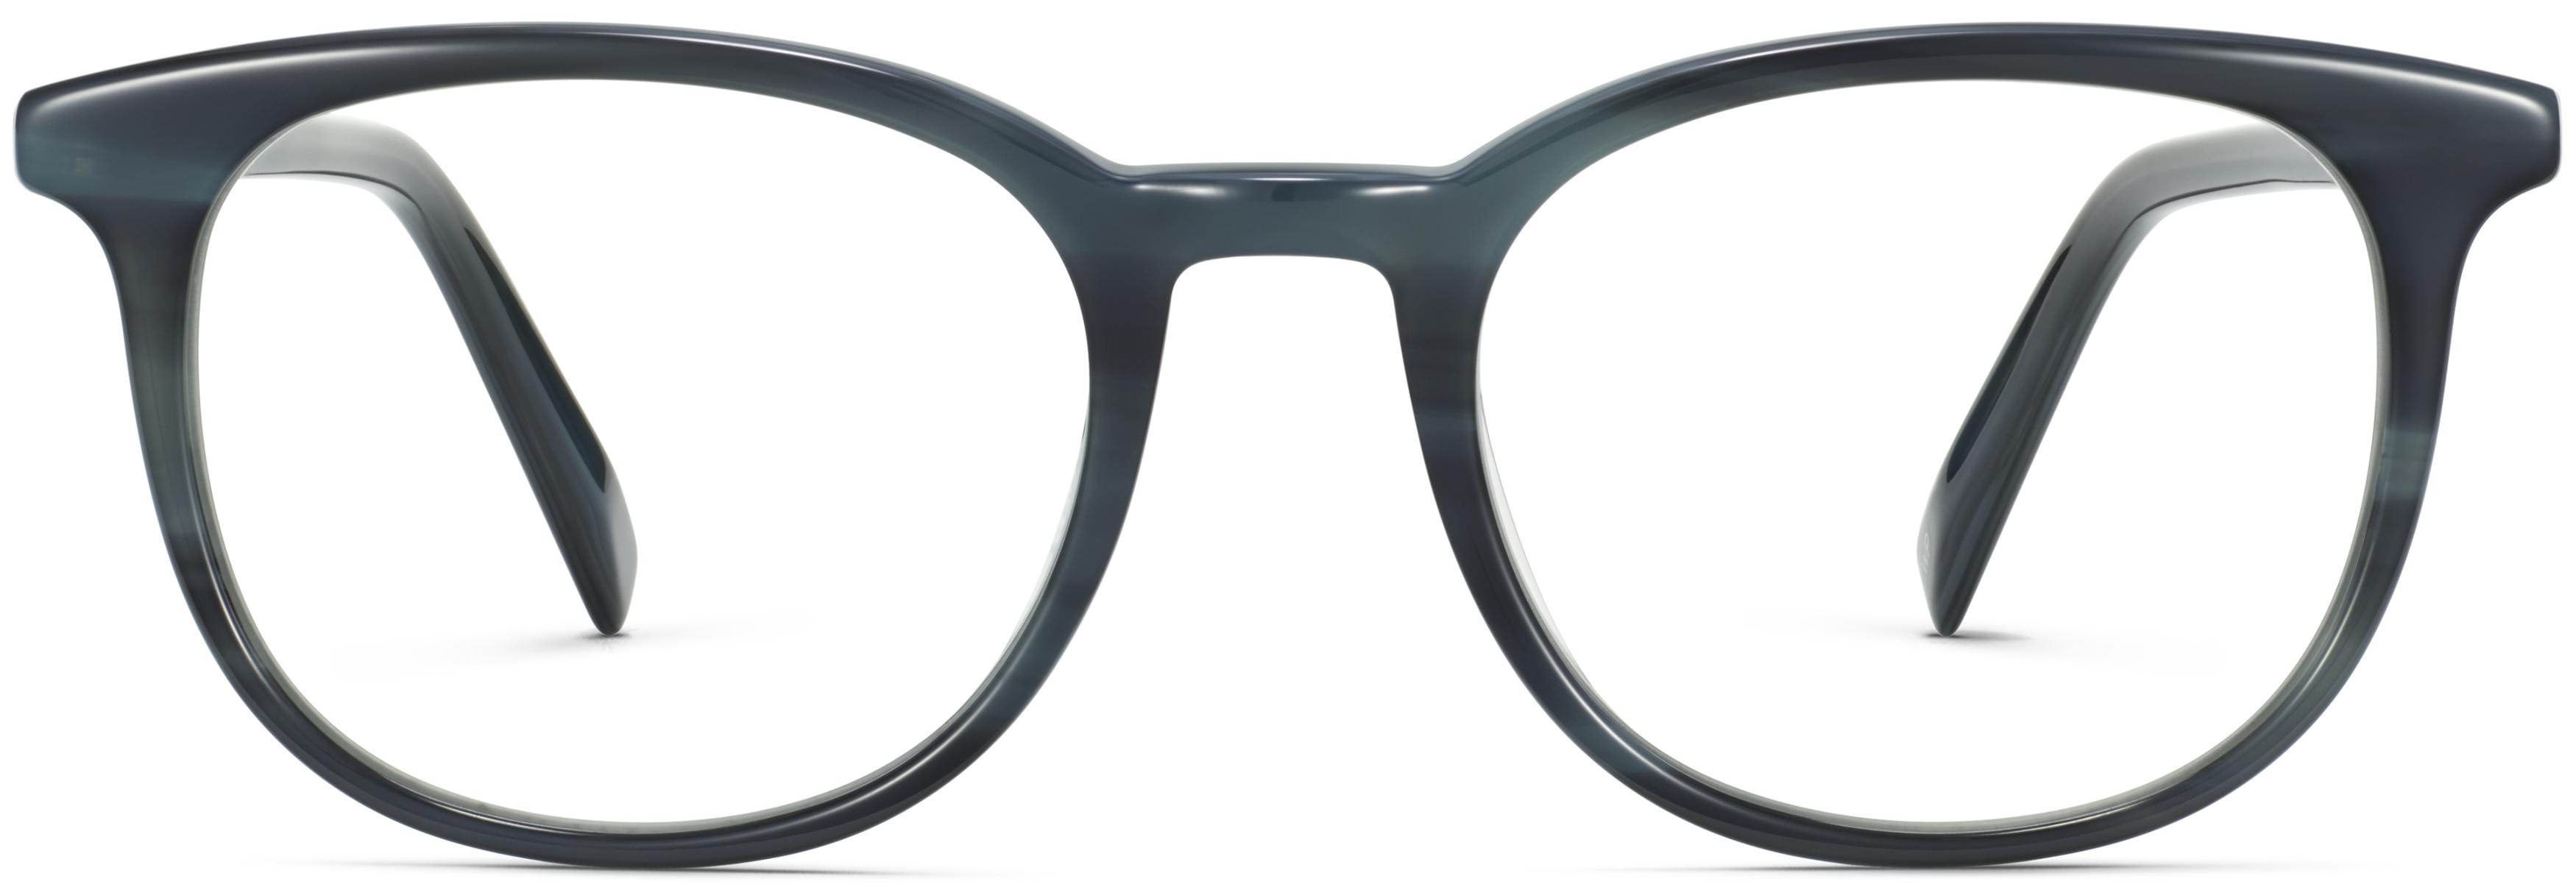 Durand Eyeglasses in Jet Black with Polished Gold | Warby Parker